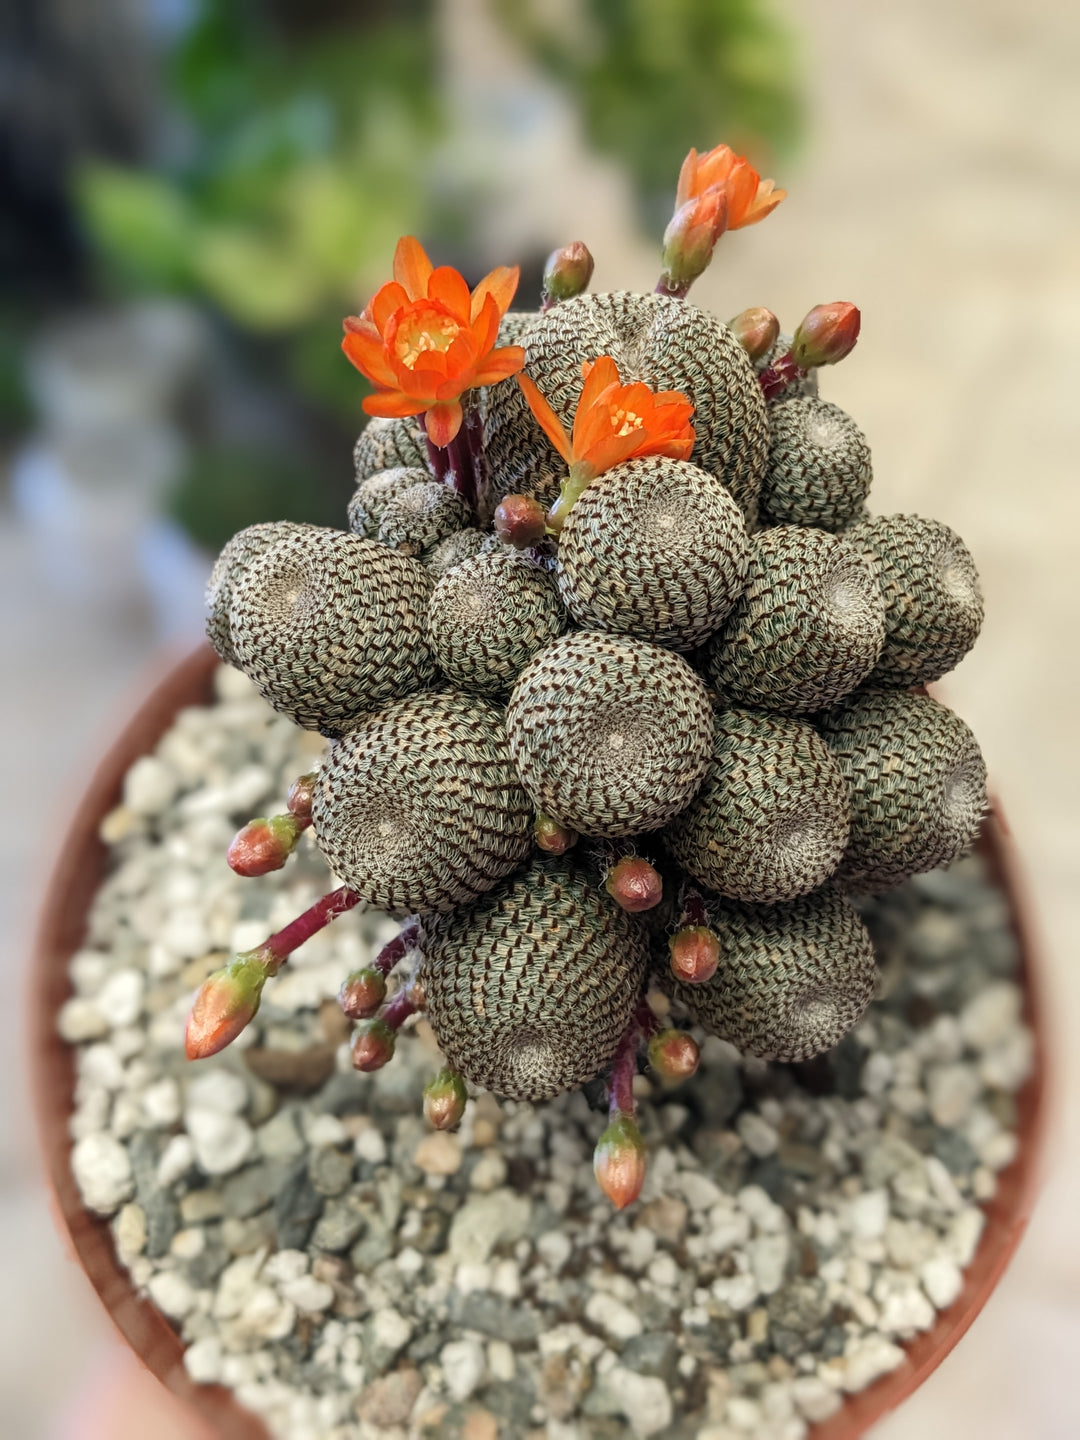 rebutia heliosa cactus with orange flowers